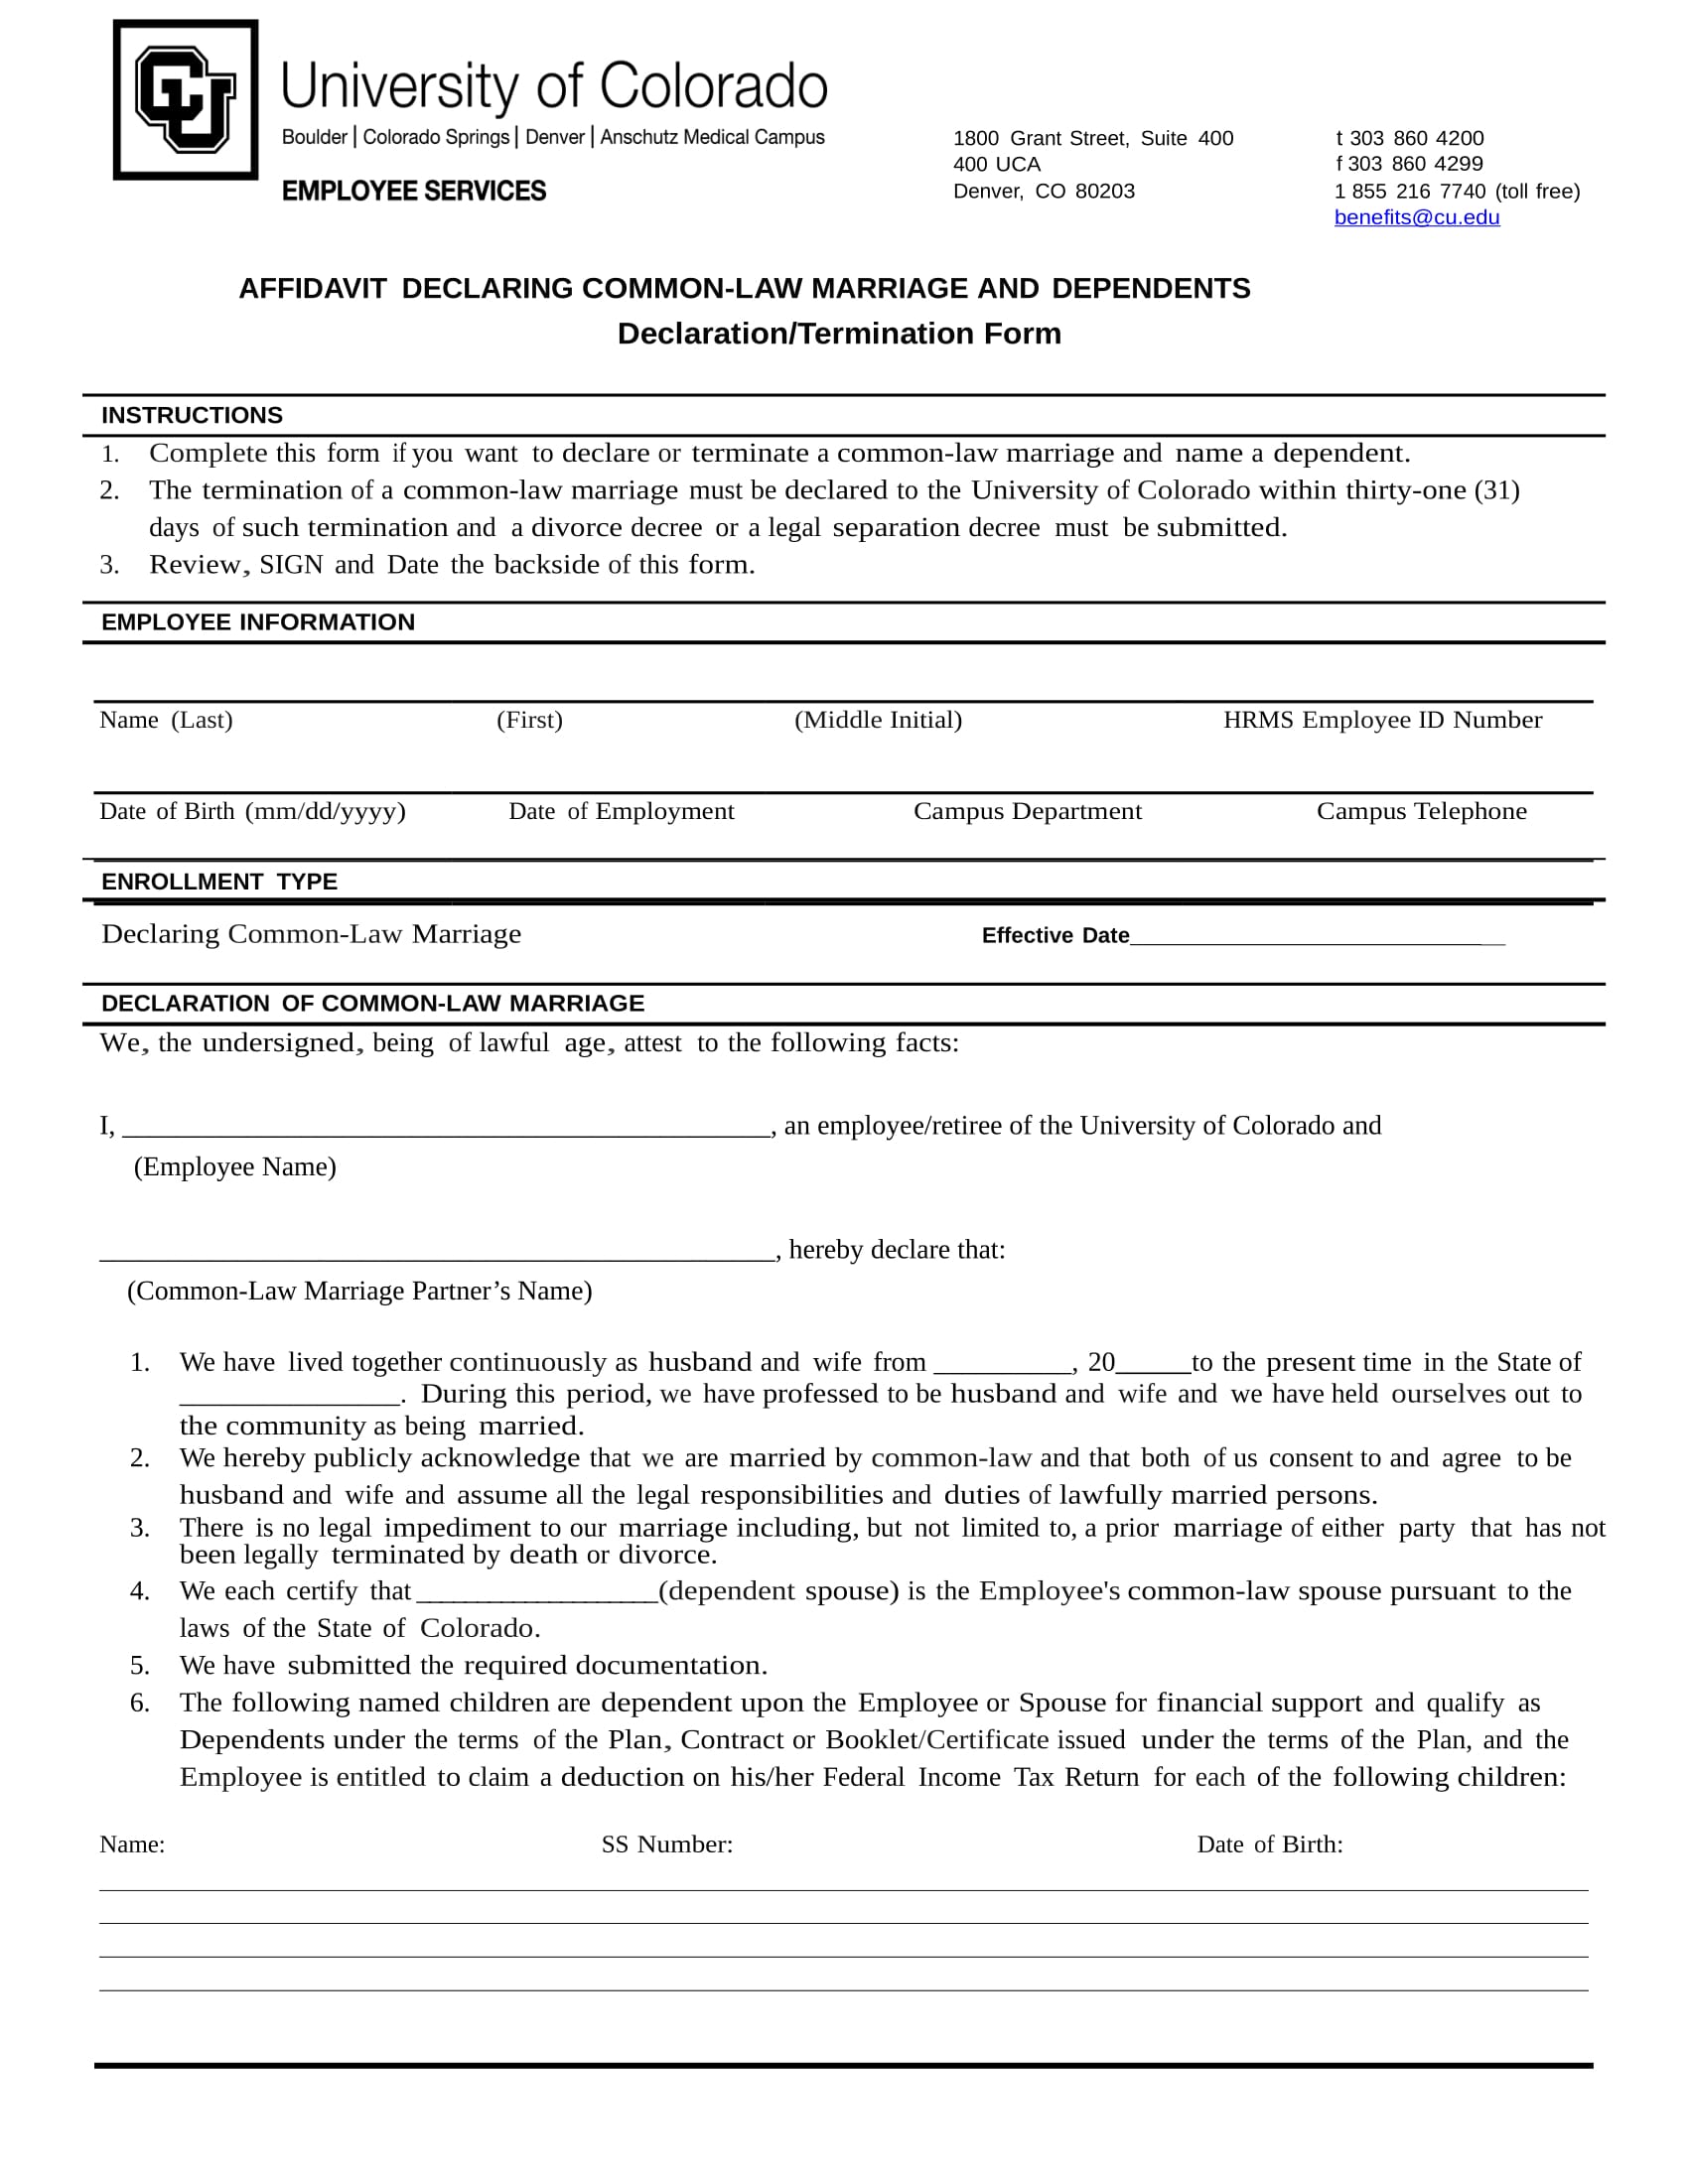 marriage affidavit form sample 1